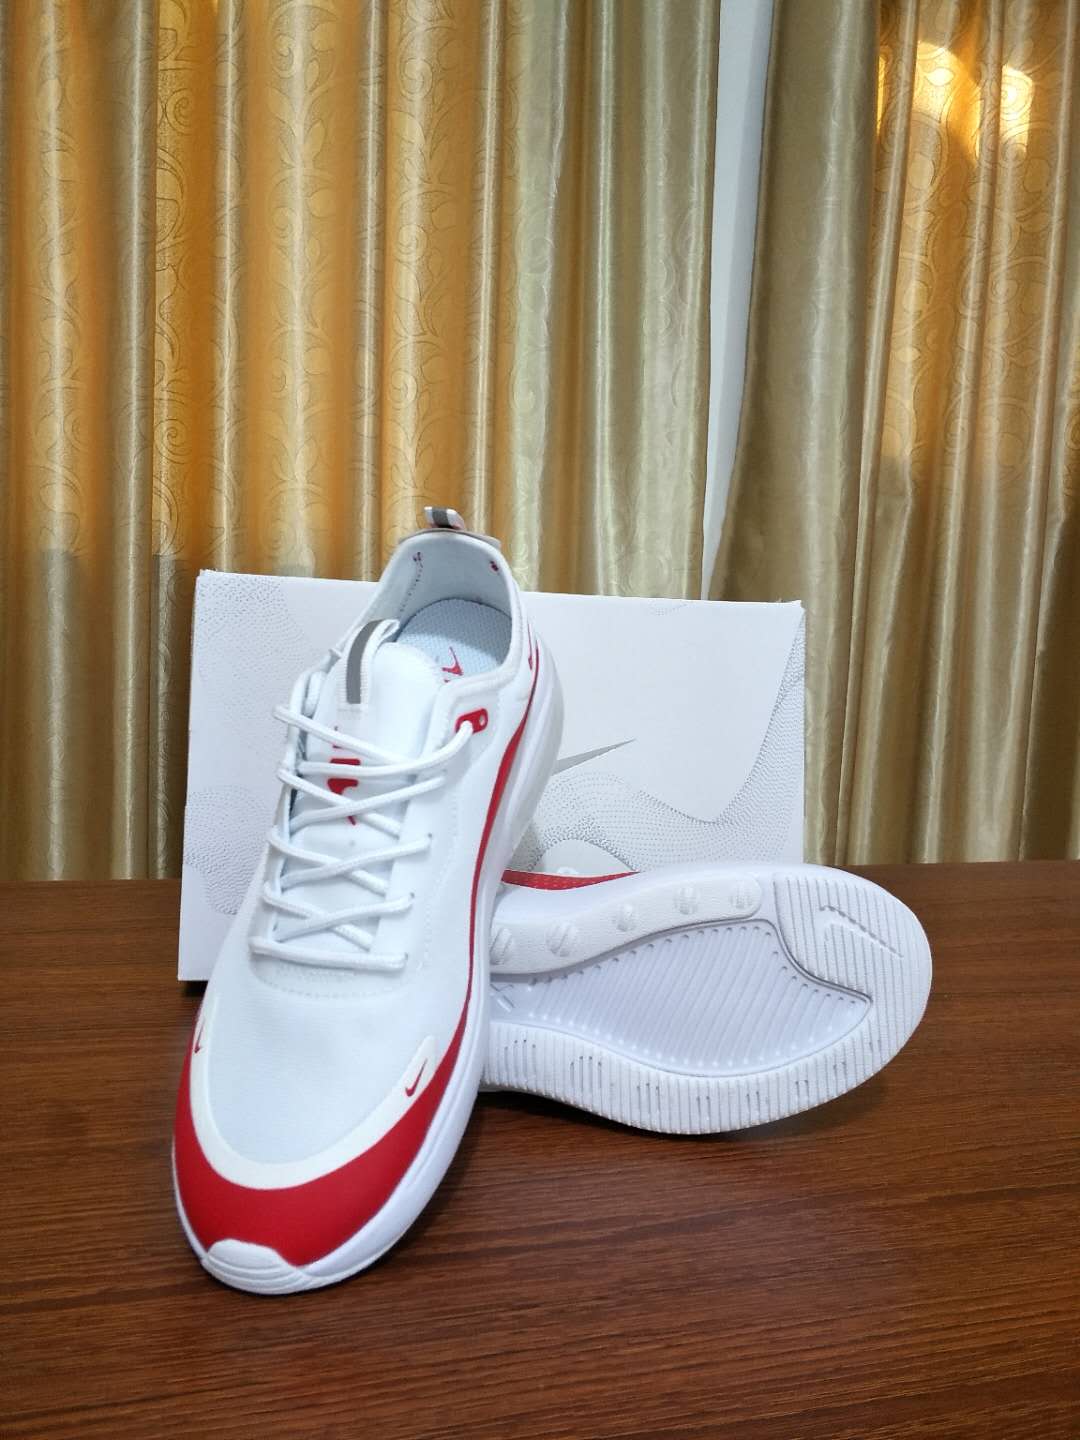 2020 Nike Air Max Dia White Red Women